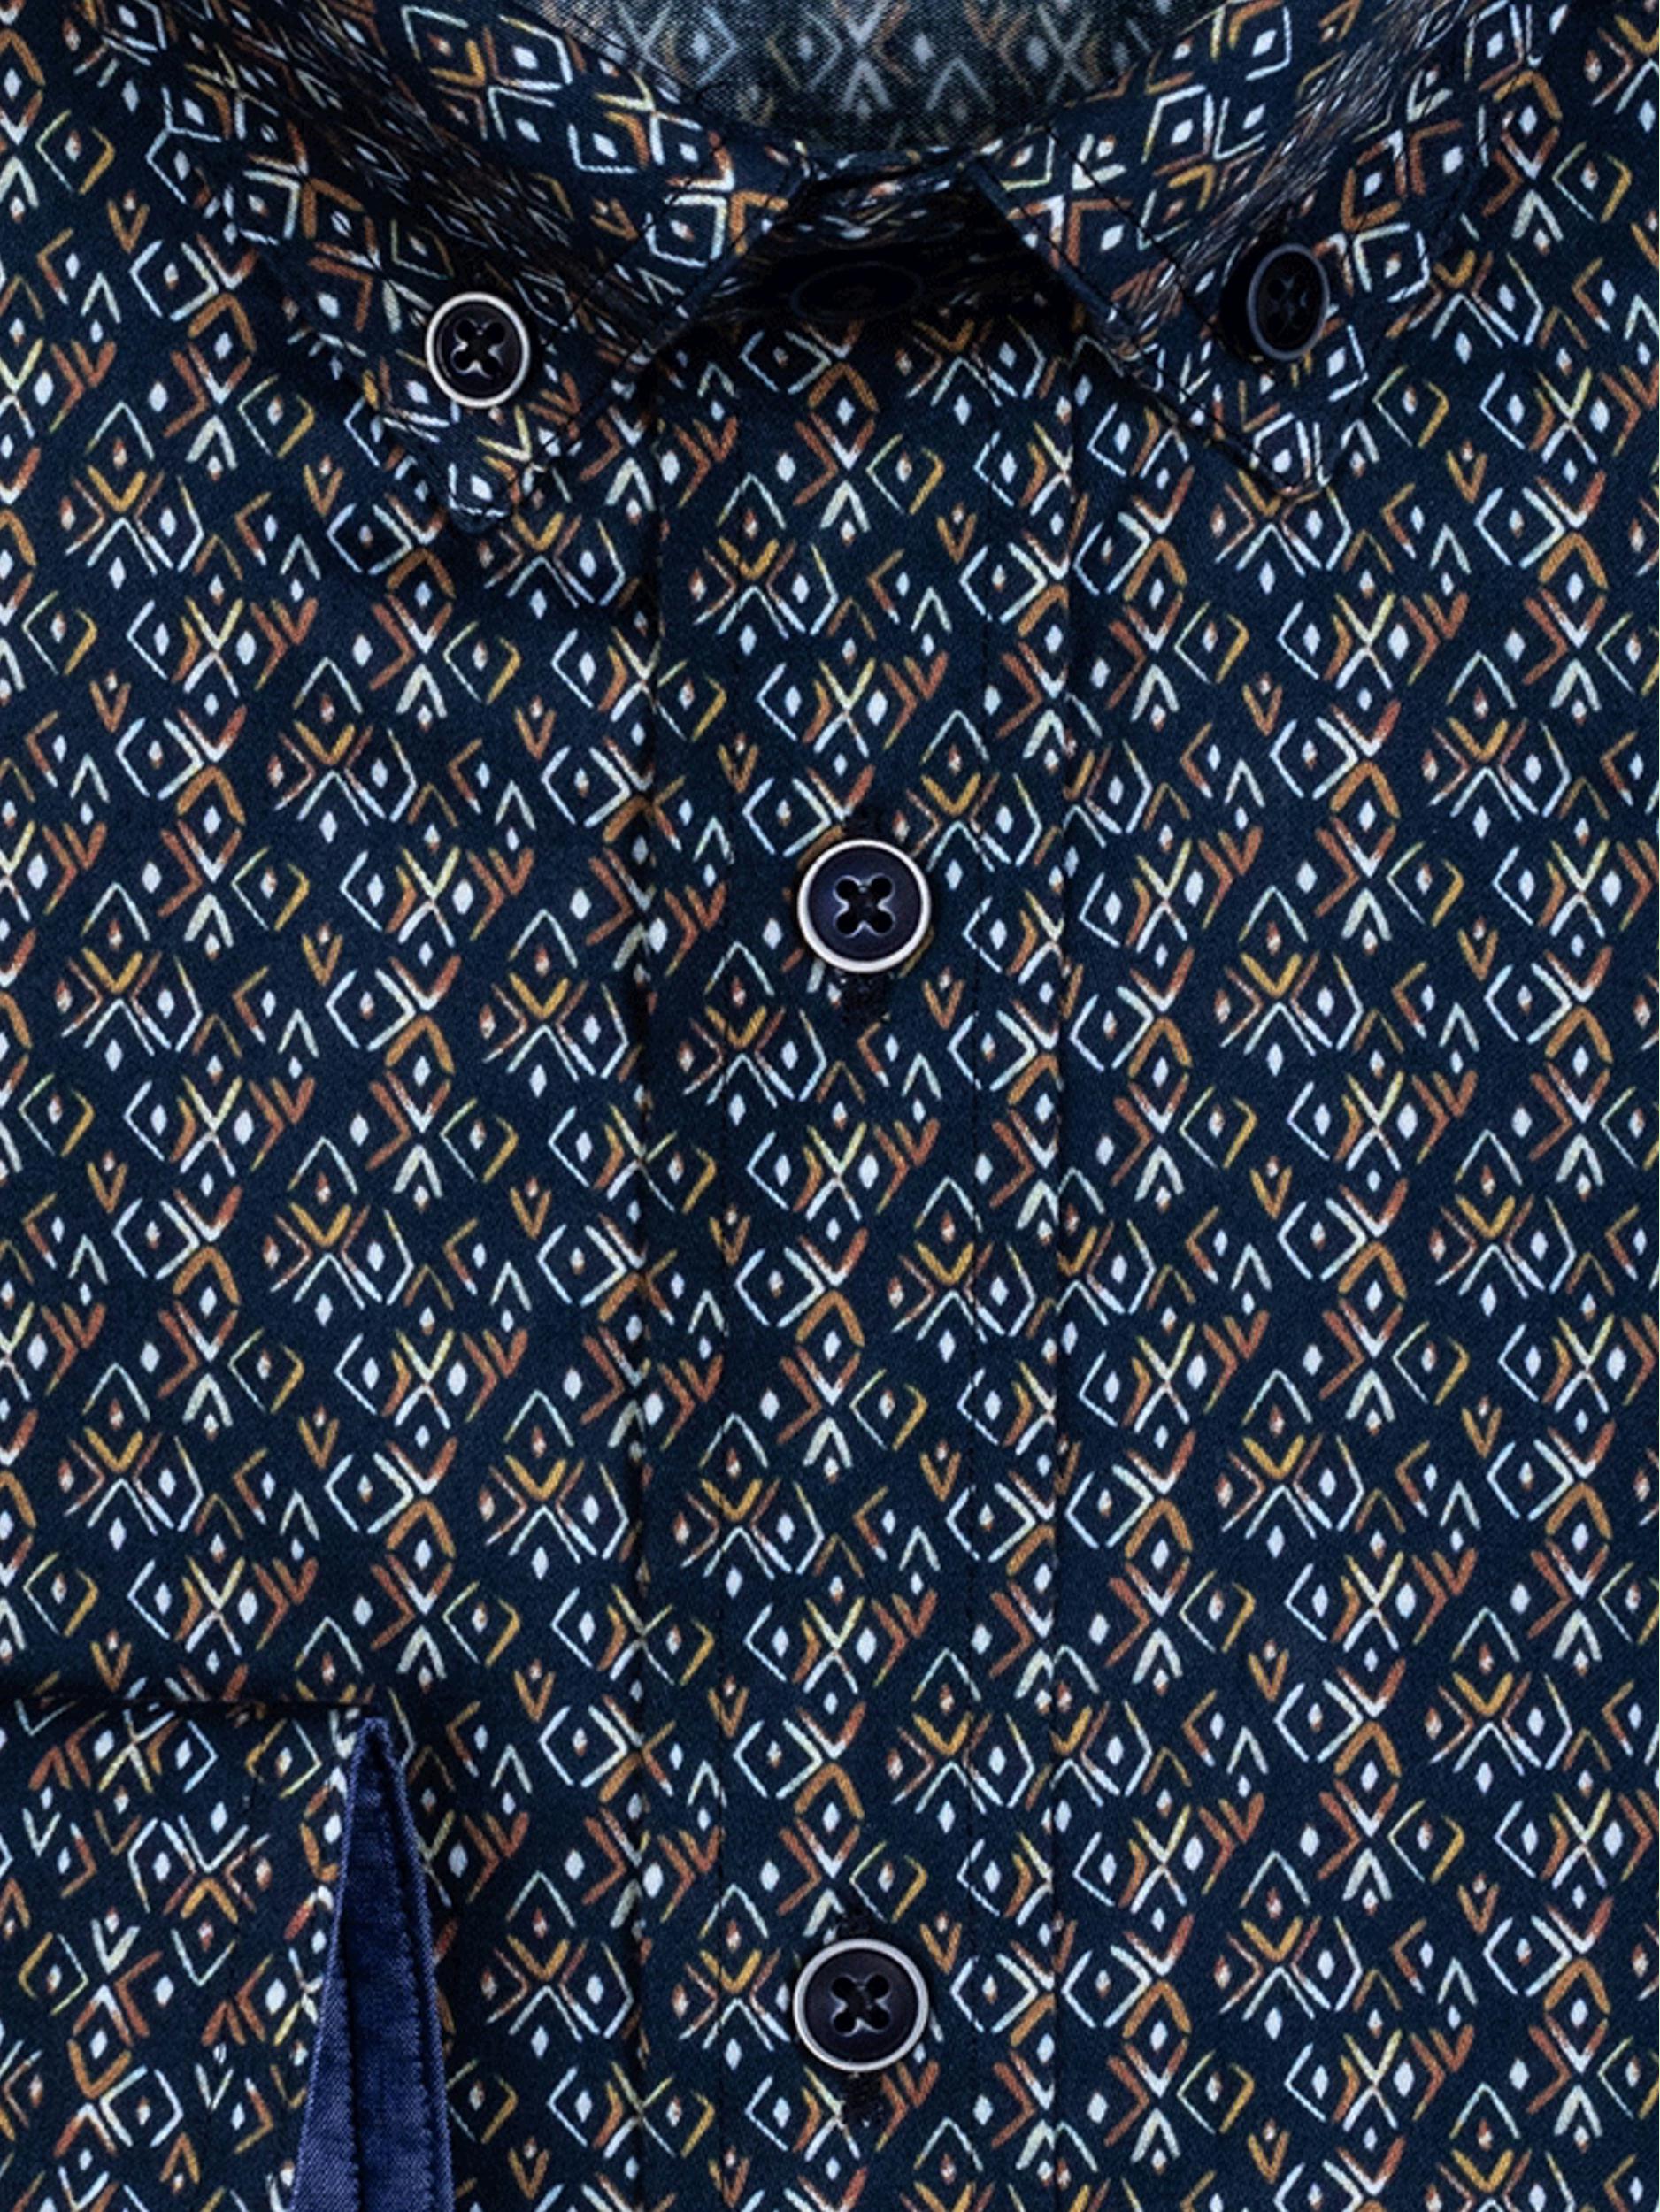 Giordano Casual hemd lange mouw Blauw Ivy 227025/60